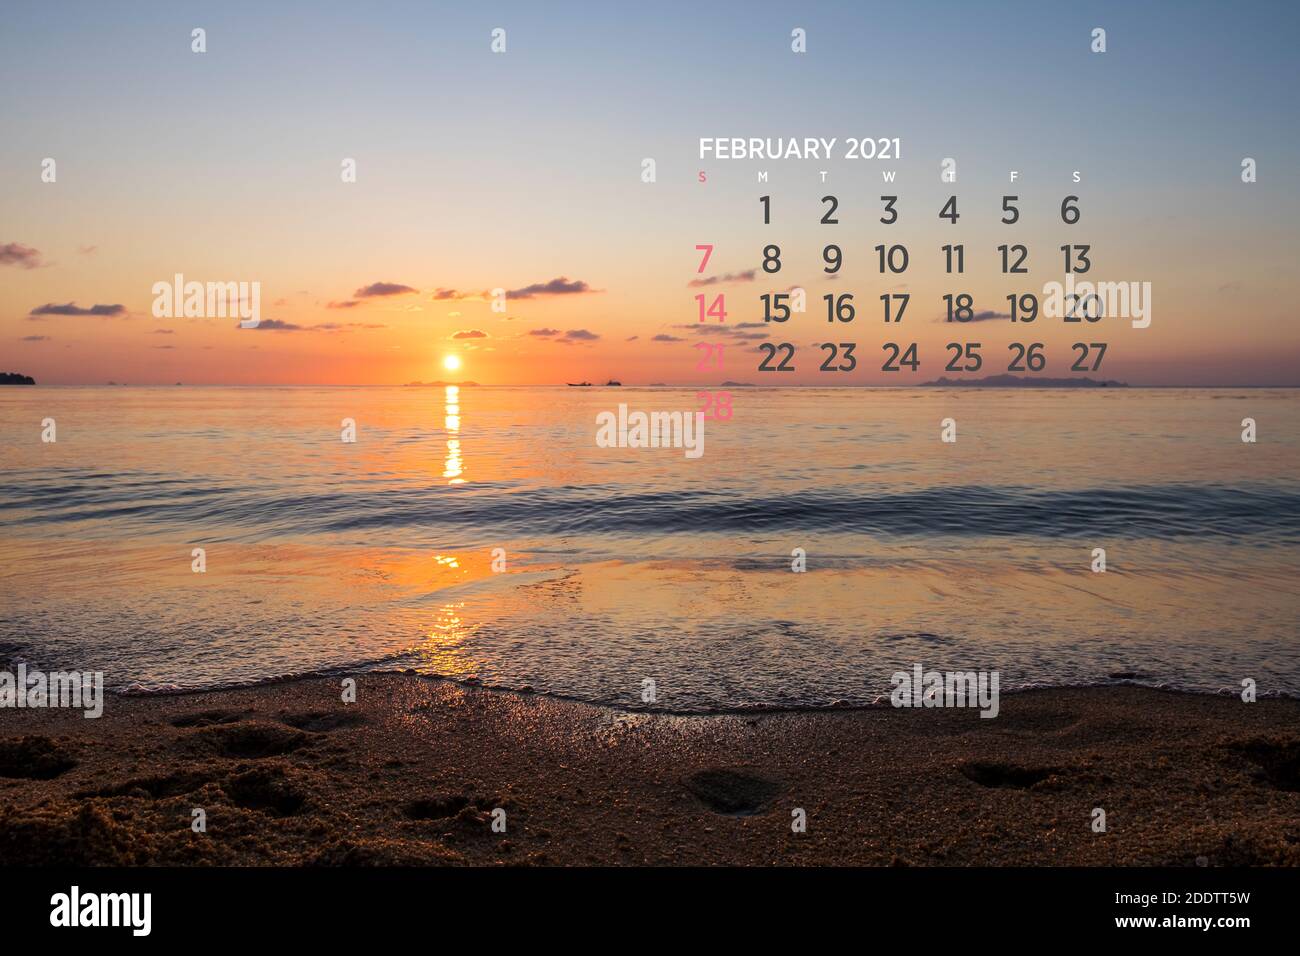 Calendario Febrero 2021. Mar, océano, playa, tropical, tema de la naturaleza. A2. 60 x 40 cm. 15.75 x 23.62 pulgadas Foto de stock